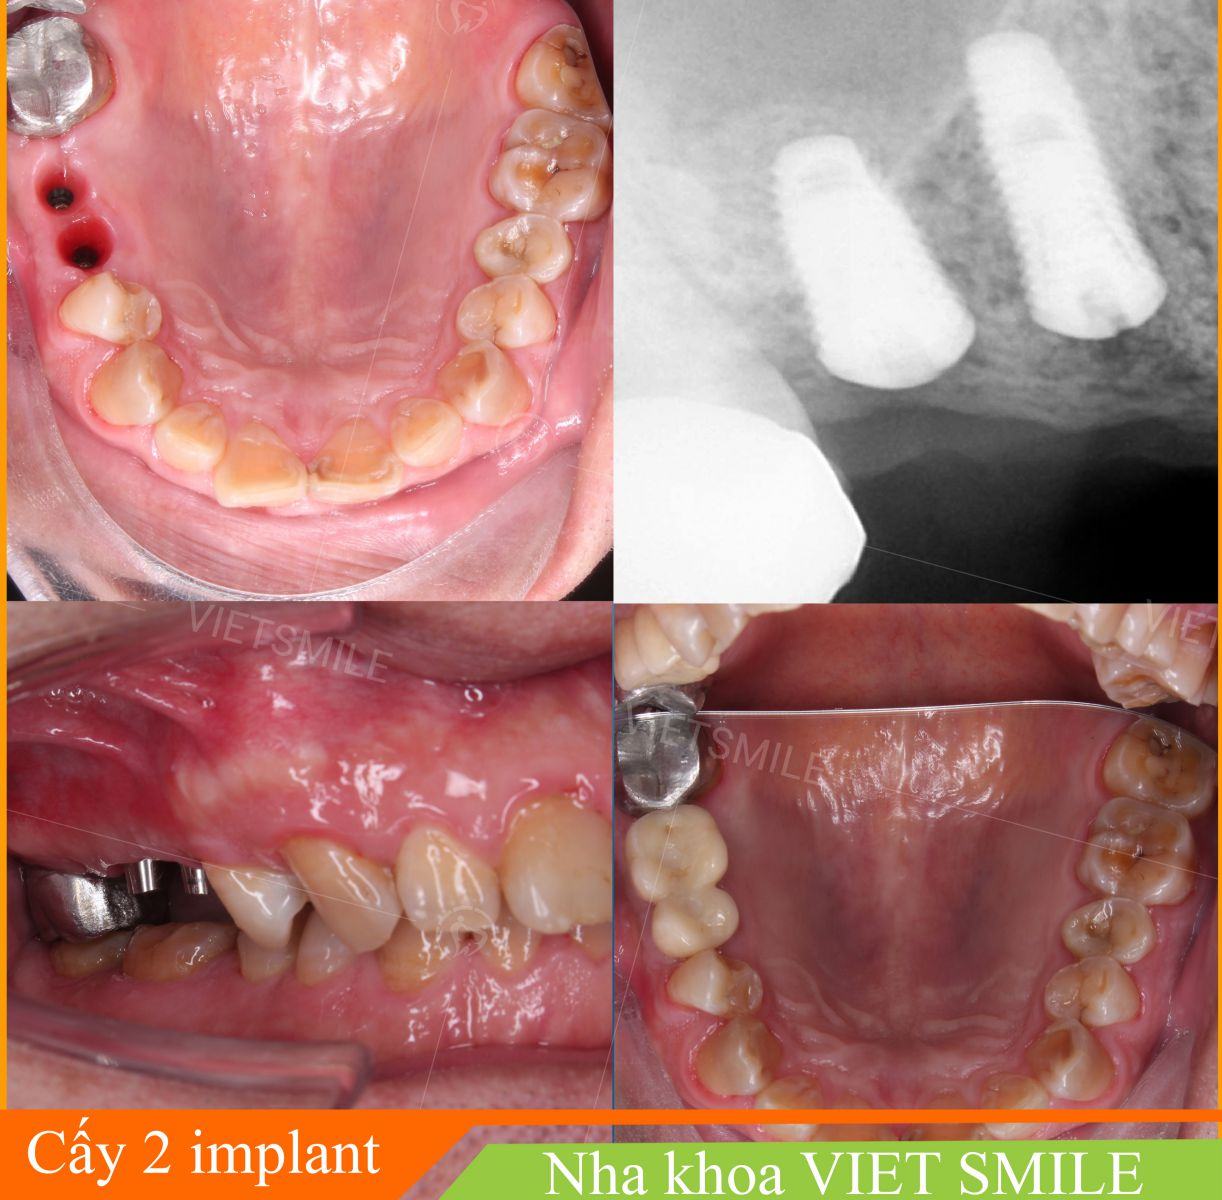 Cay ghep implant rang 6, 7